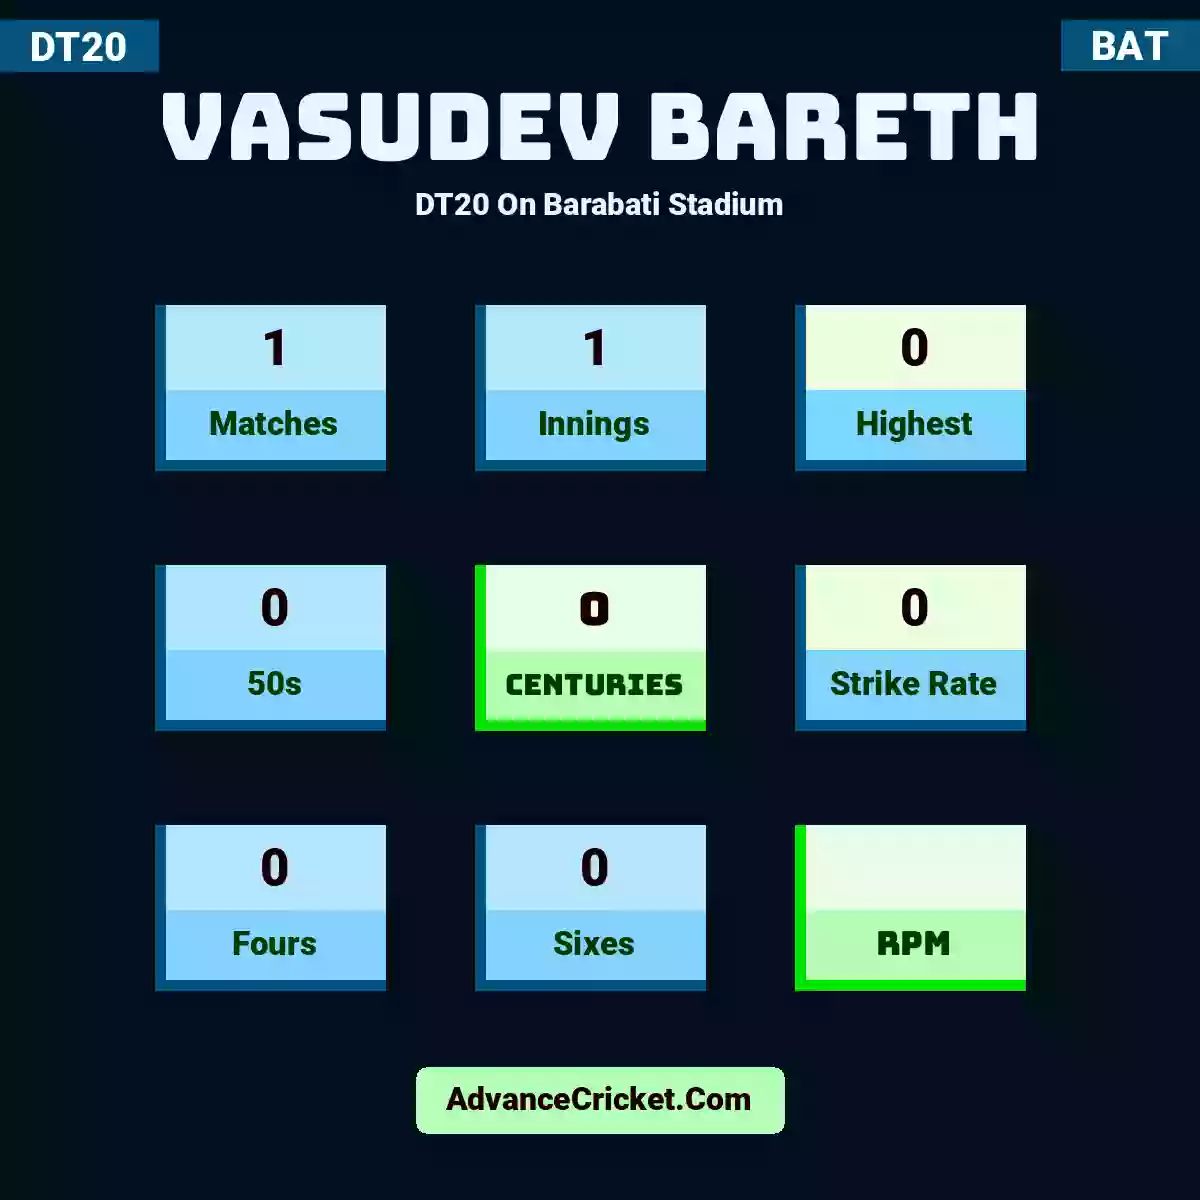 Vasudev Bareth DT20  On Barabati Stadium, Vasudev Bareth played 1 matches, scored 0 runs as highest, 0 half-centuries, and 0 centuries, with a strike rate of 0. V.Bareth hit 0 fours and 0 sixes.